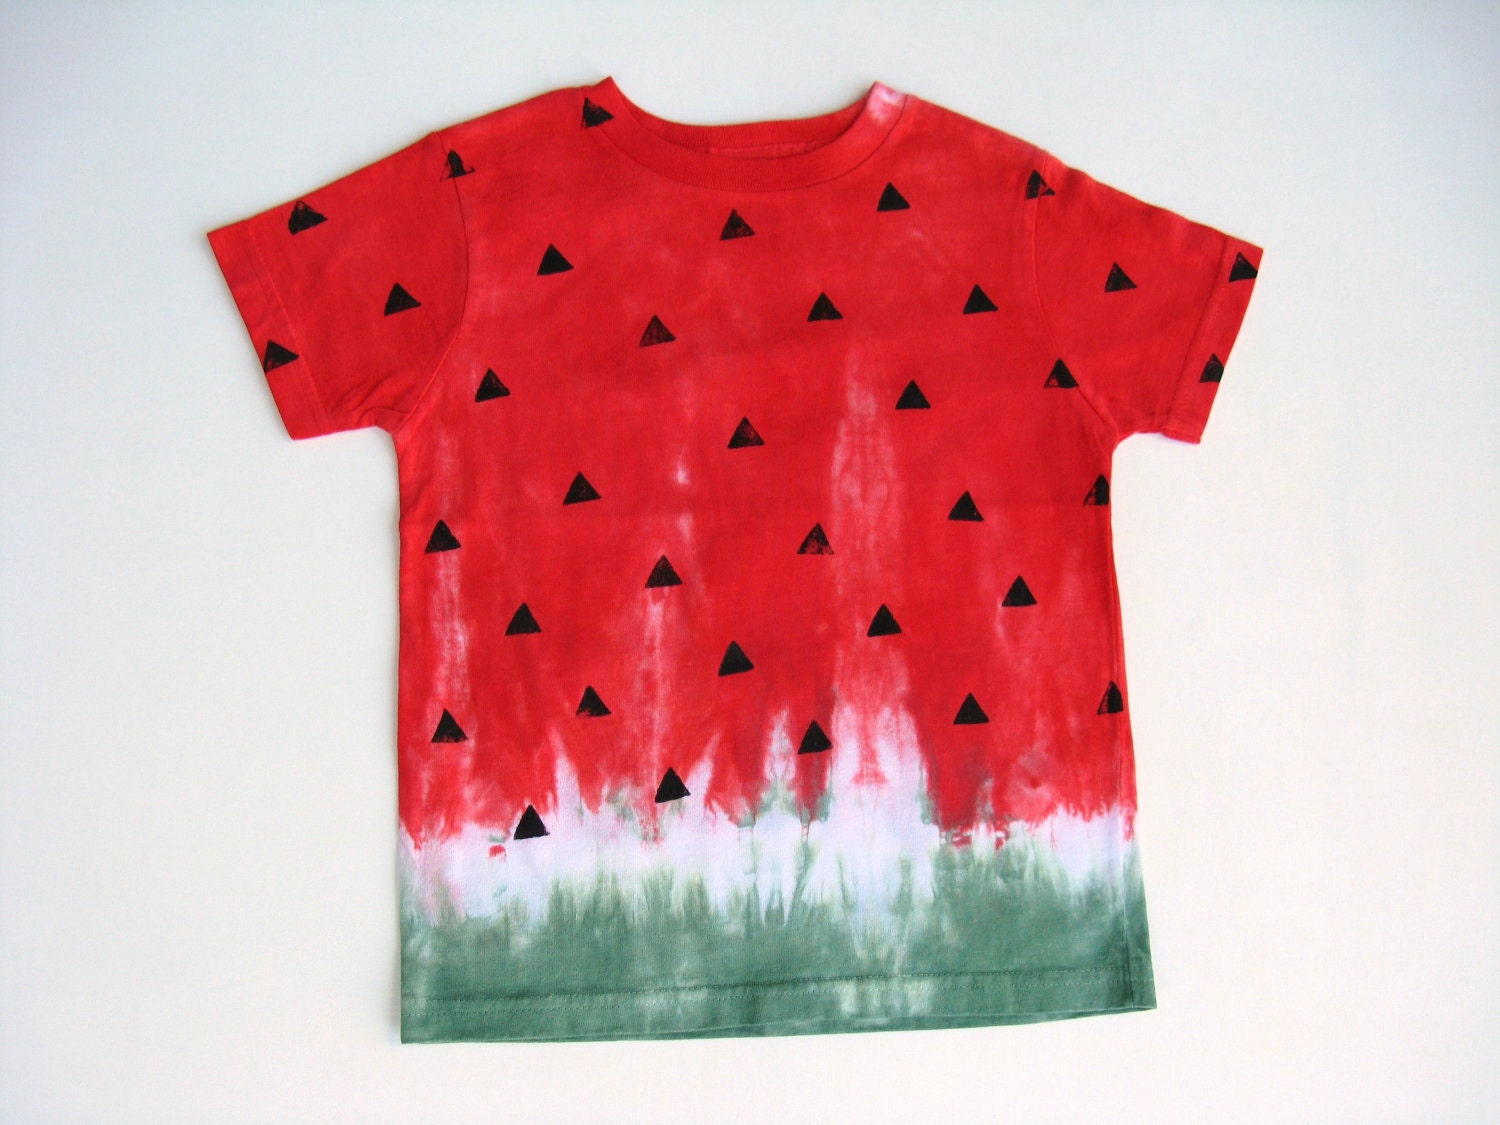 blouse  design Watermelon Shirt by Toddler Baby and watermelon boygirlboygirldesign T Tie